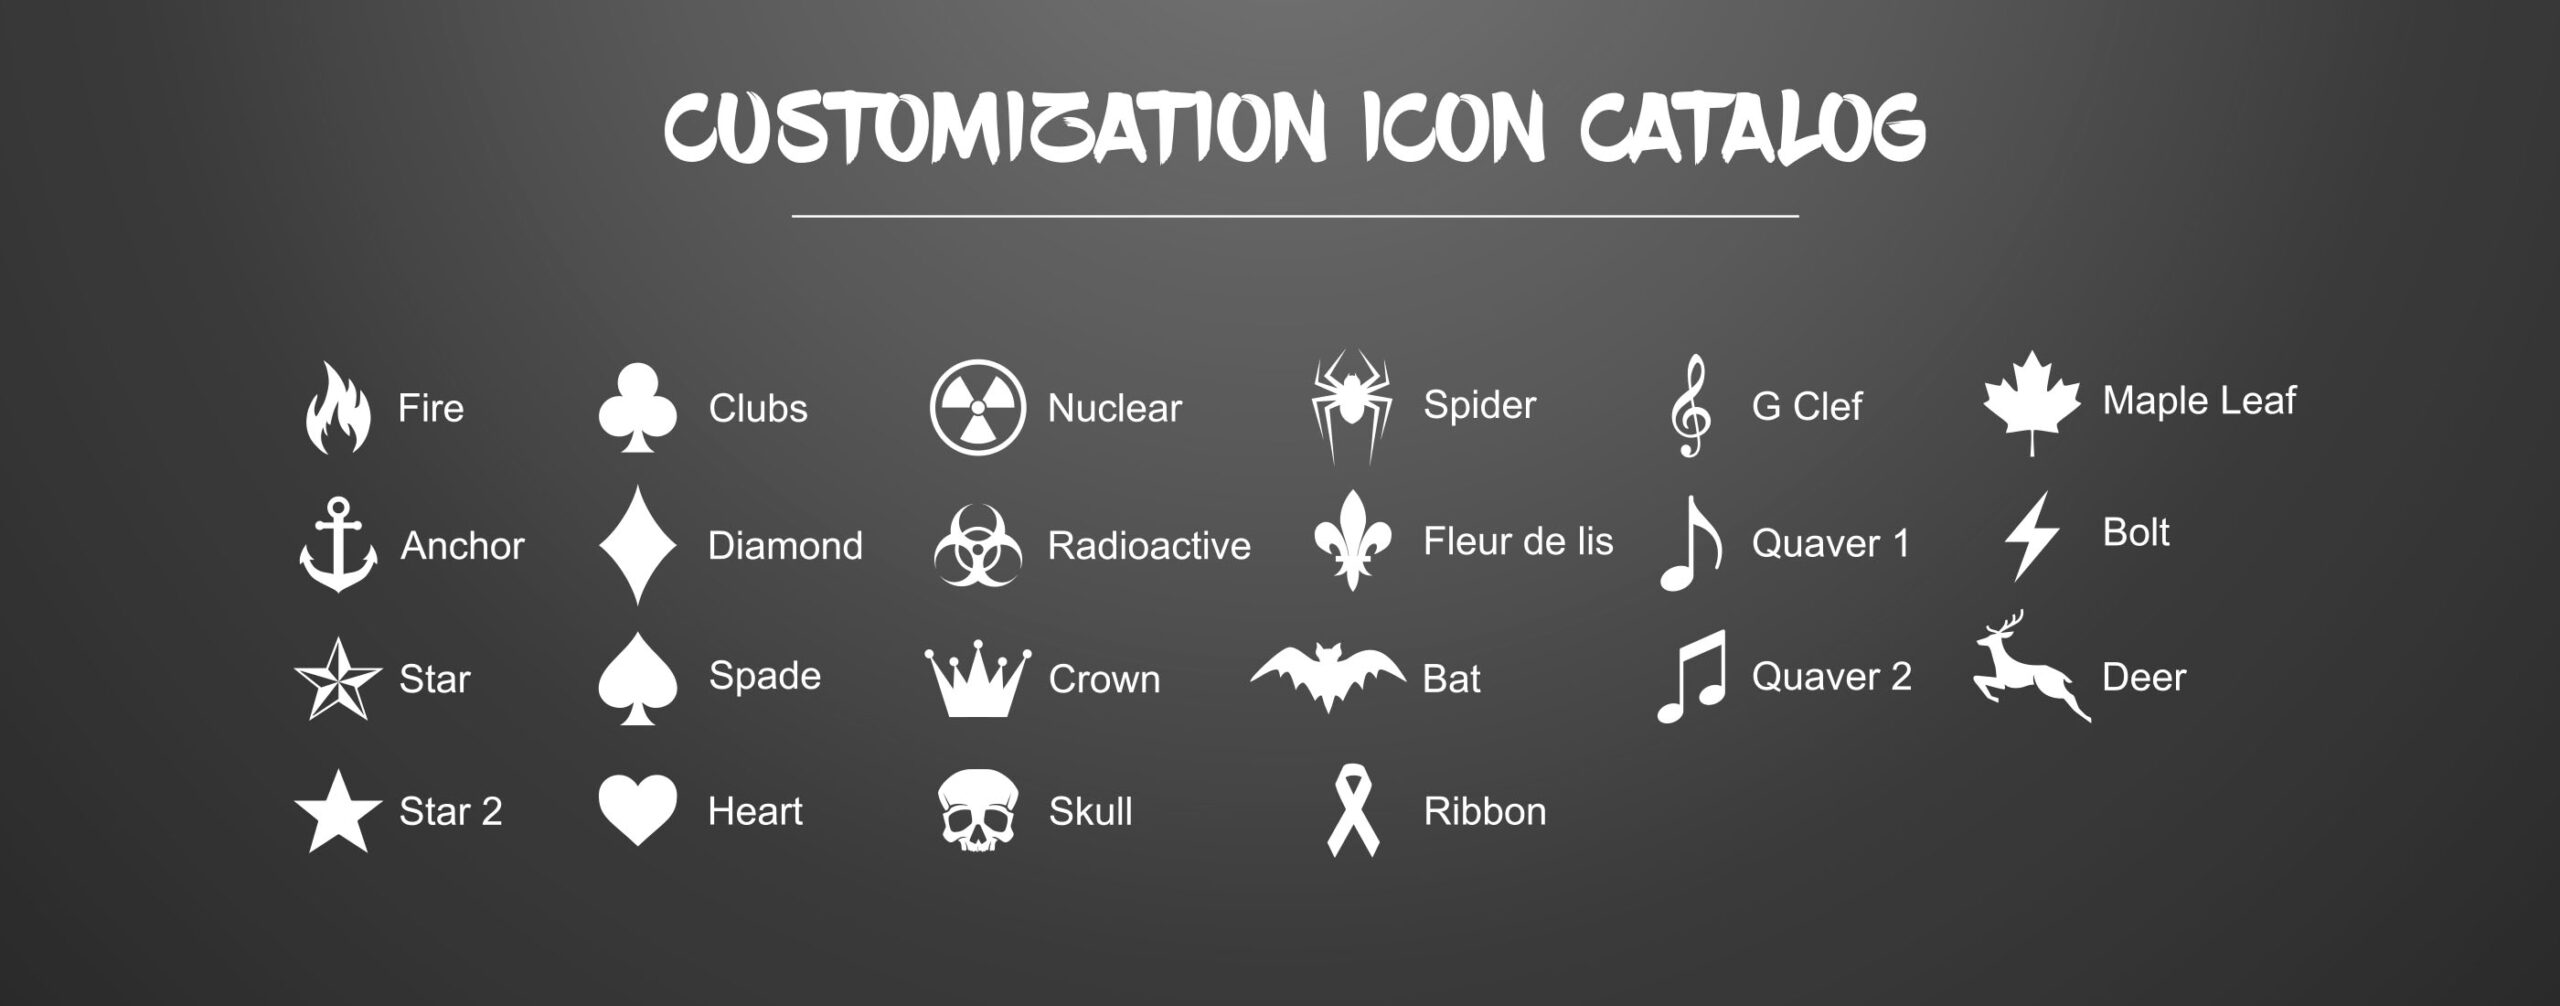 Customization icon catalog